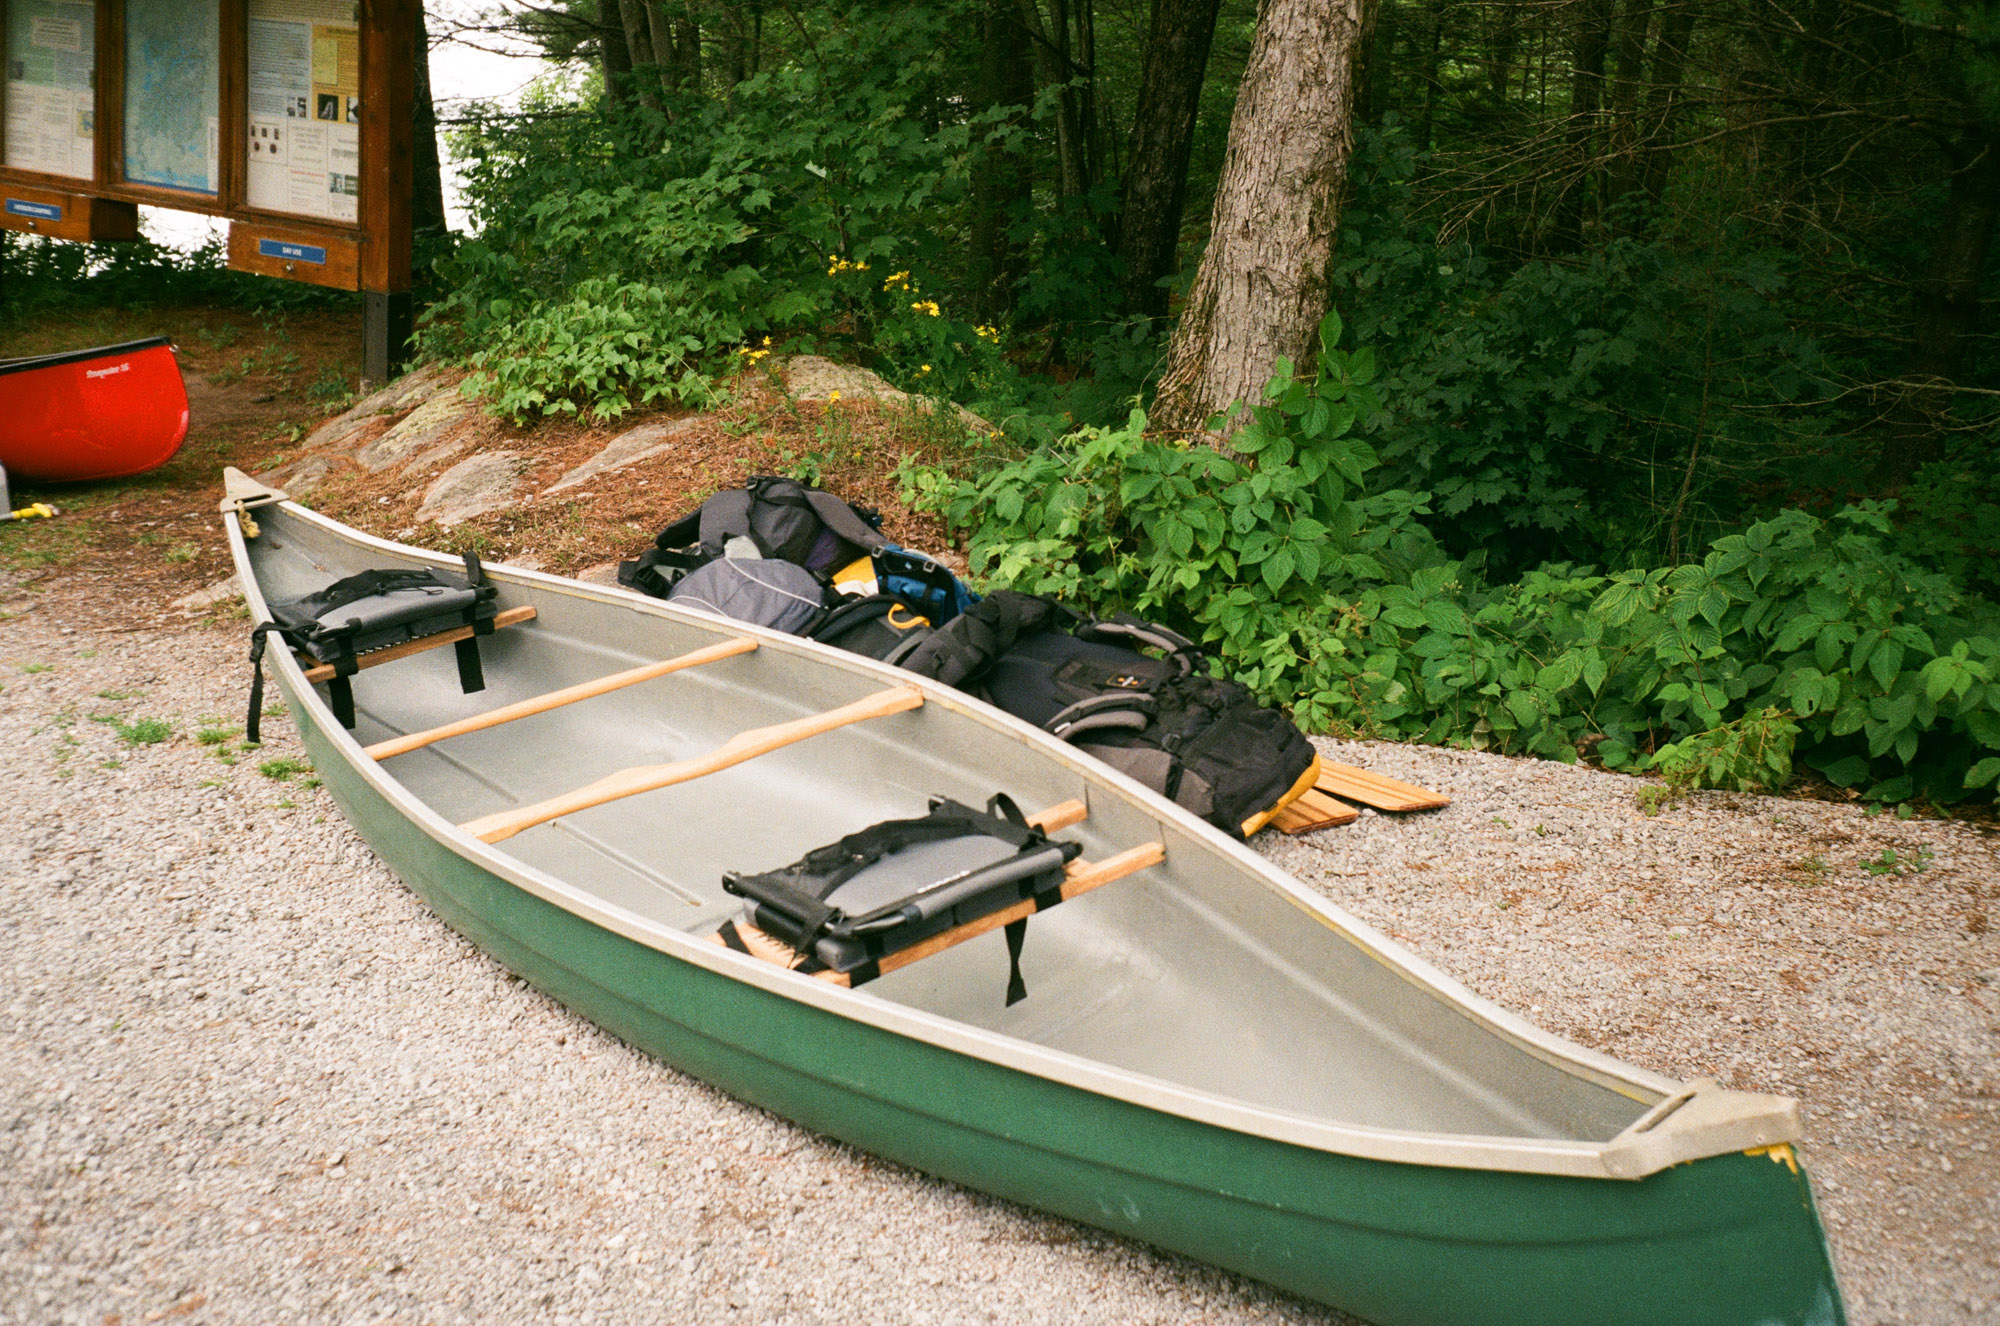 Canoe and gear | Olympus Trip 35